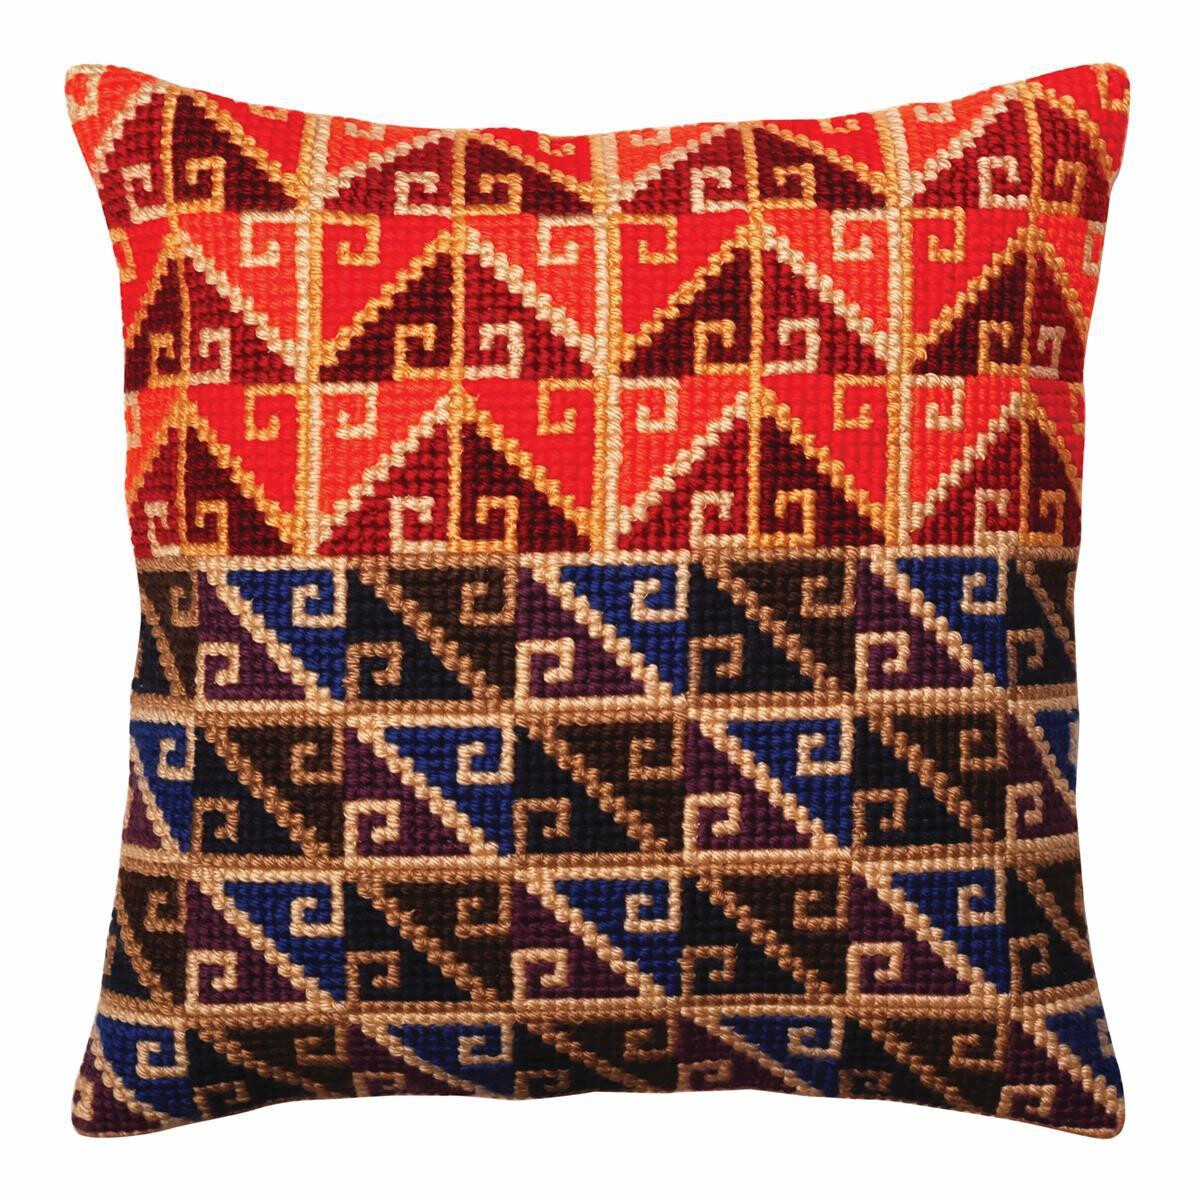 CdA stamped cross stitch kit cushion "Peruvian...